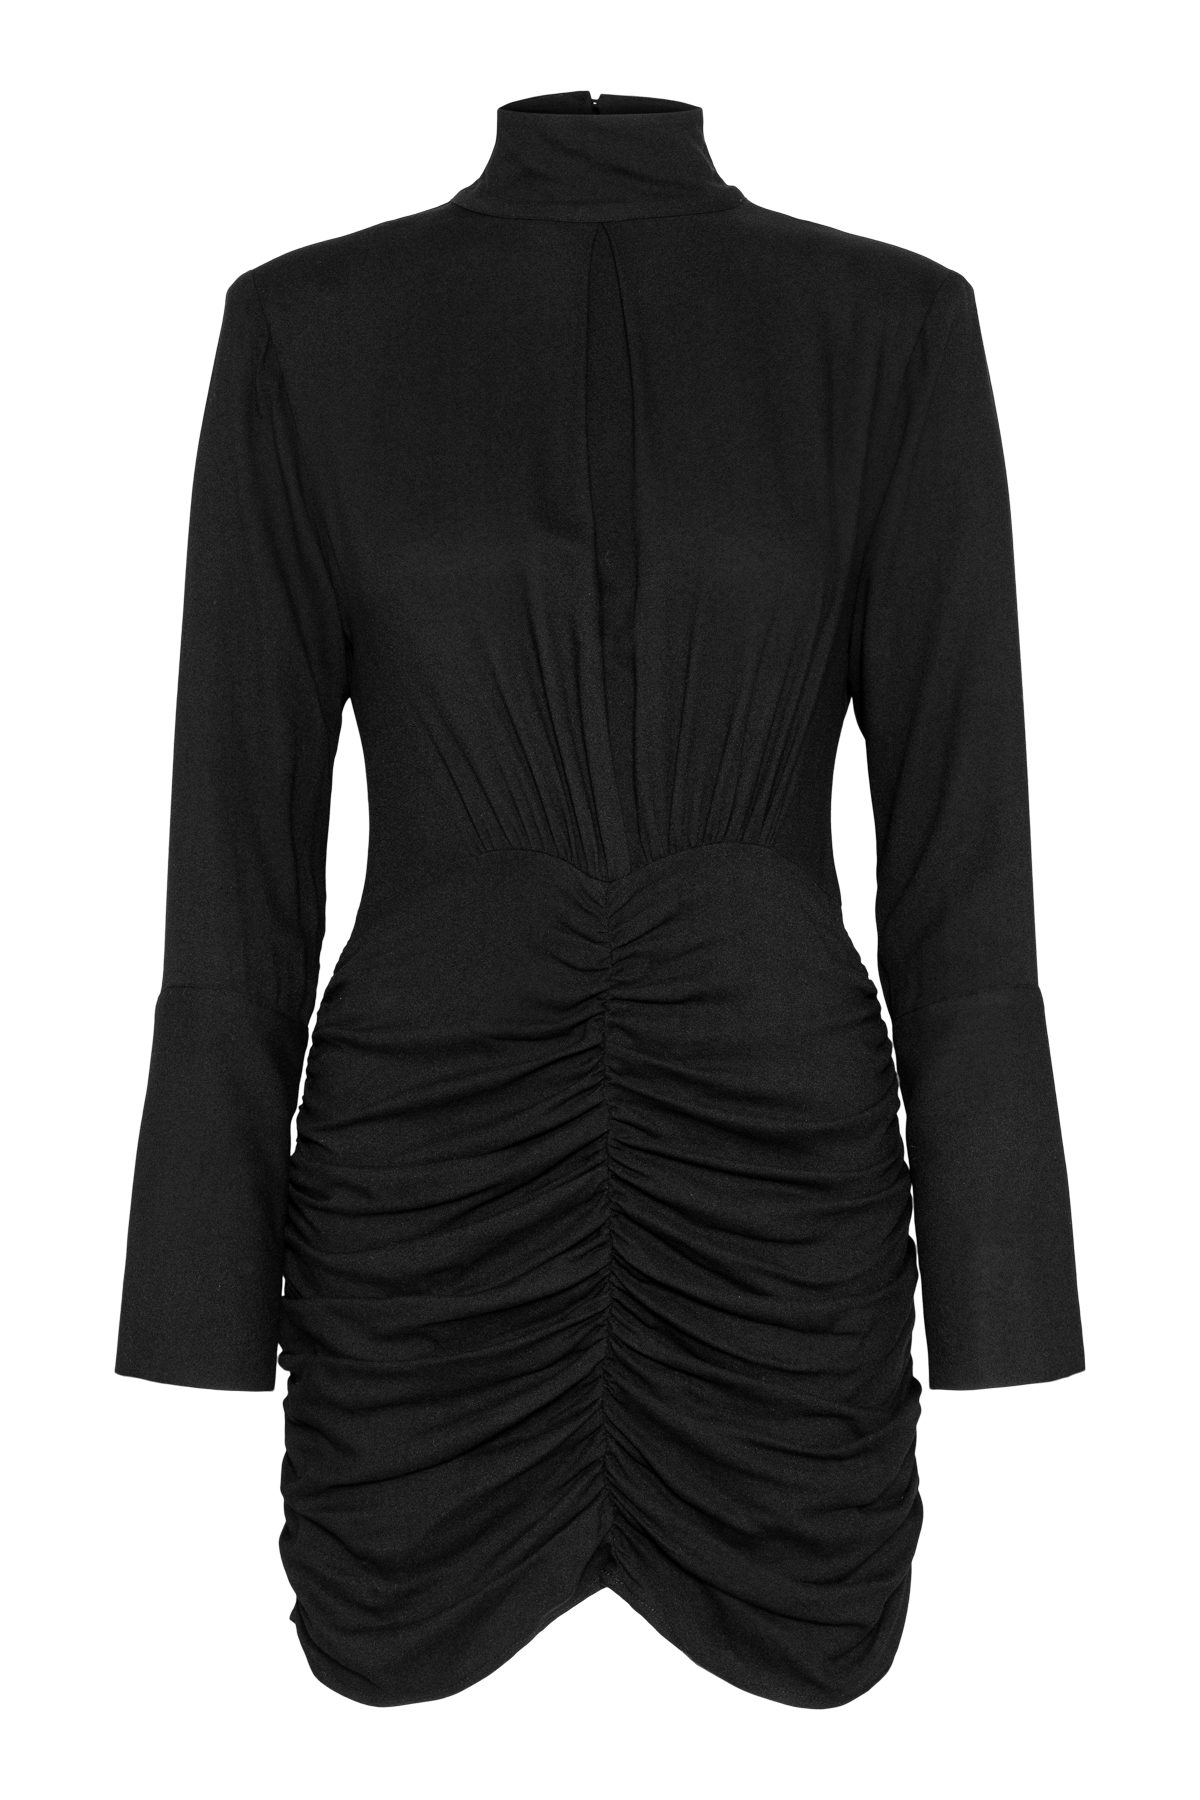 Cocktail Dress Black